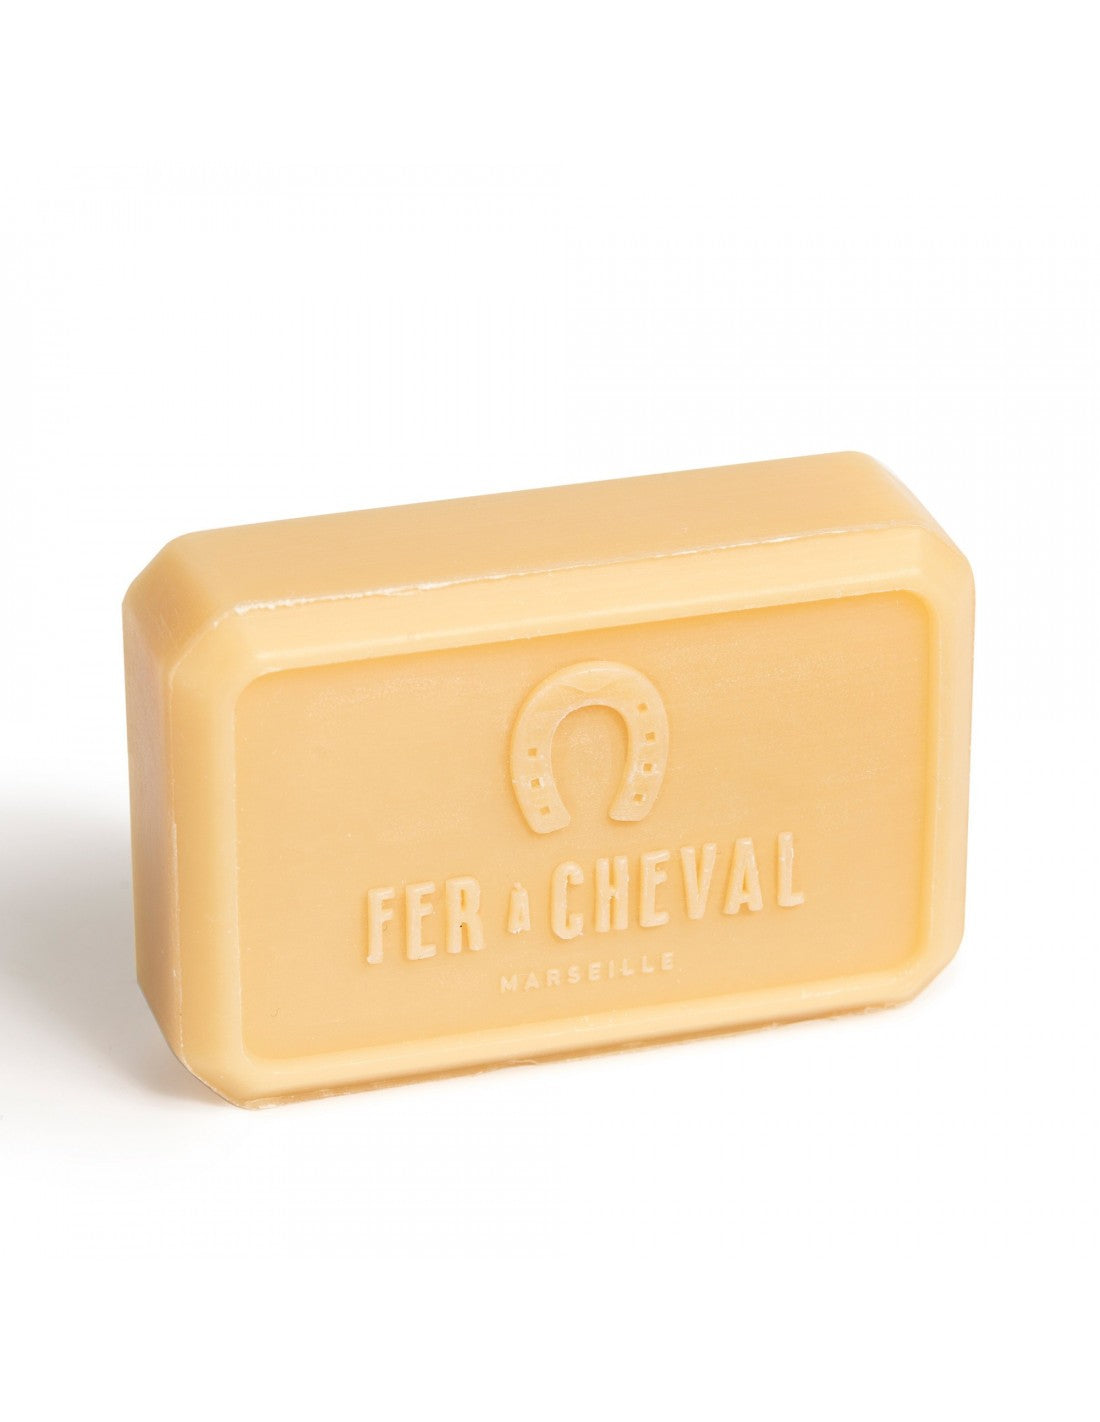 Gentle scented soap - Invigorating Lavender 125g